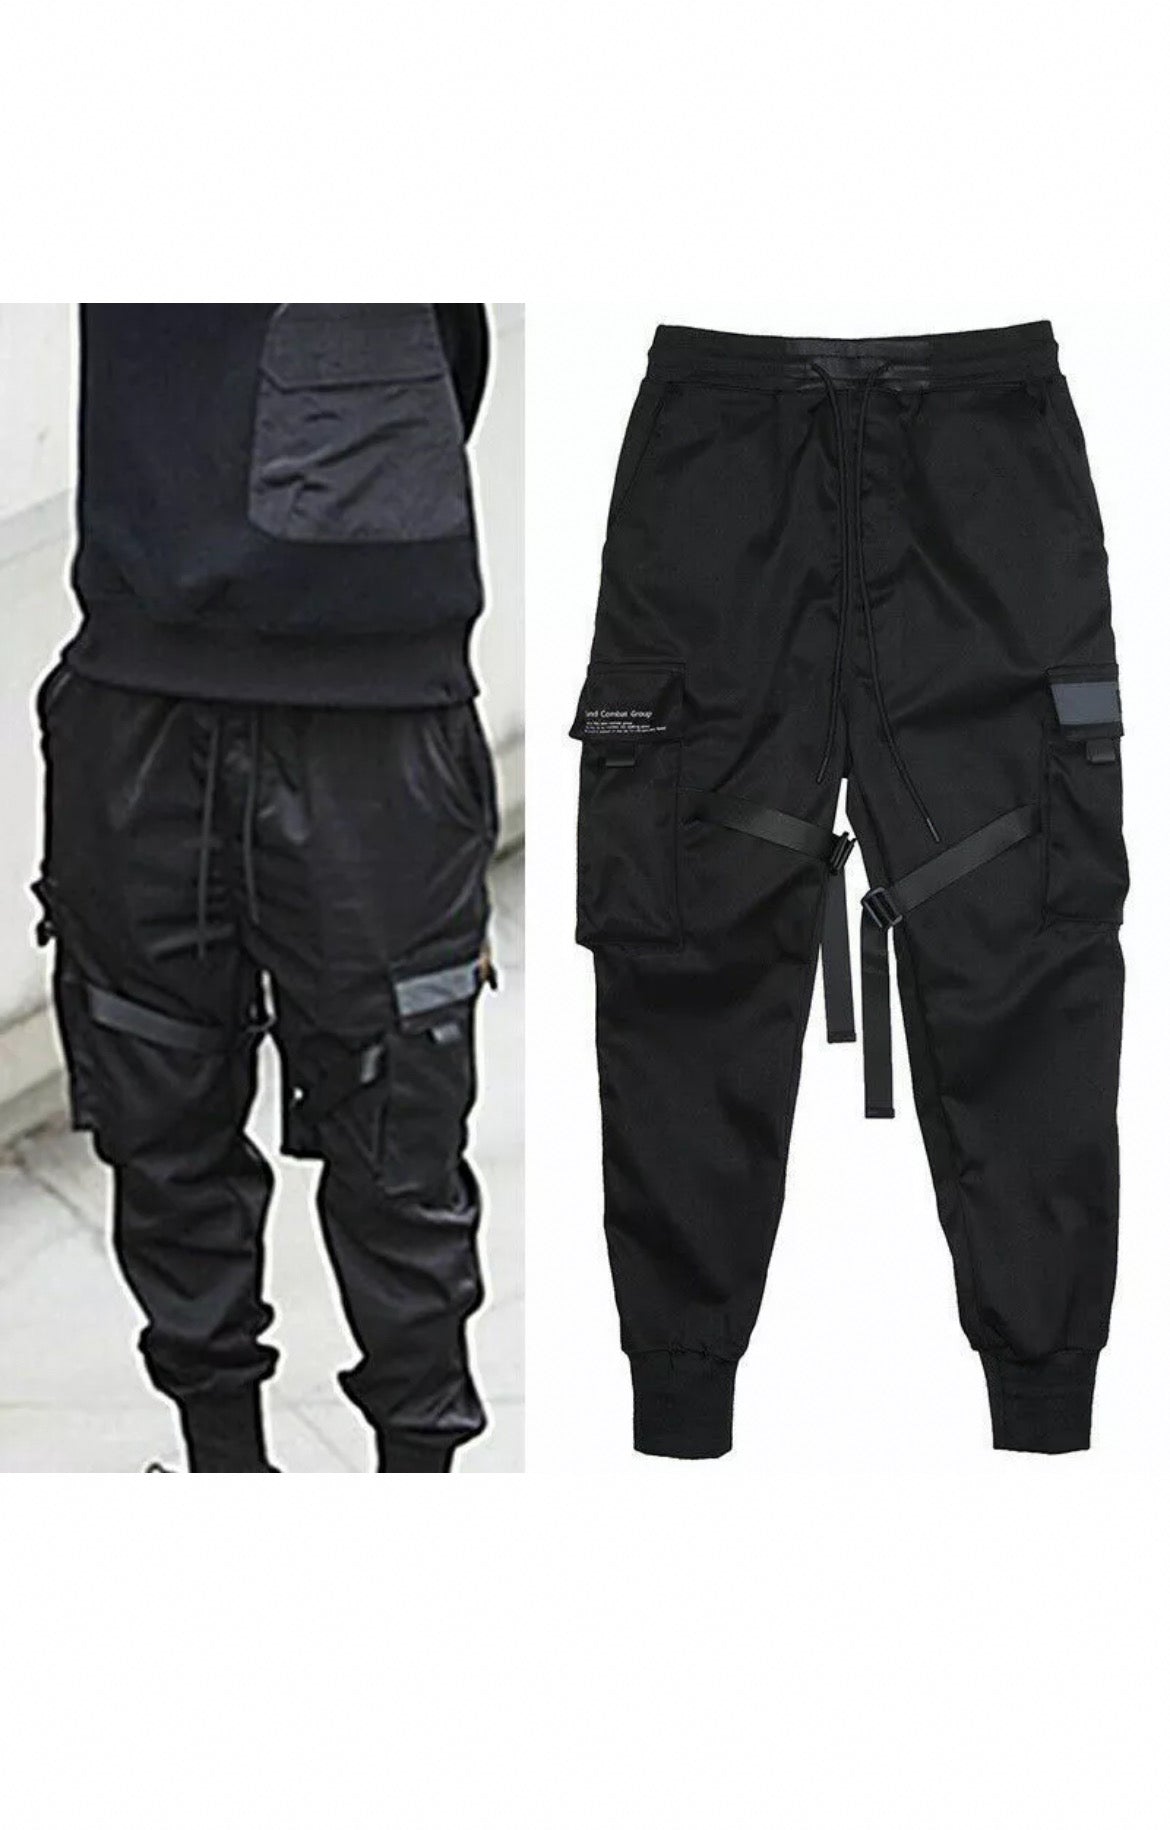 Tactical Trousers Pants Harem Black Joggers